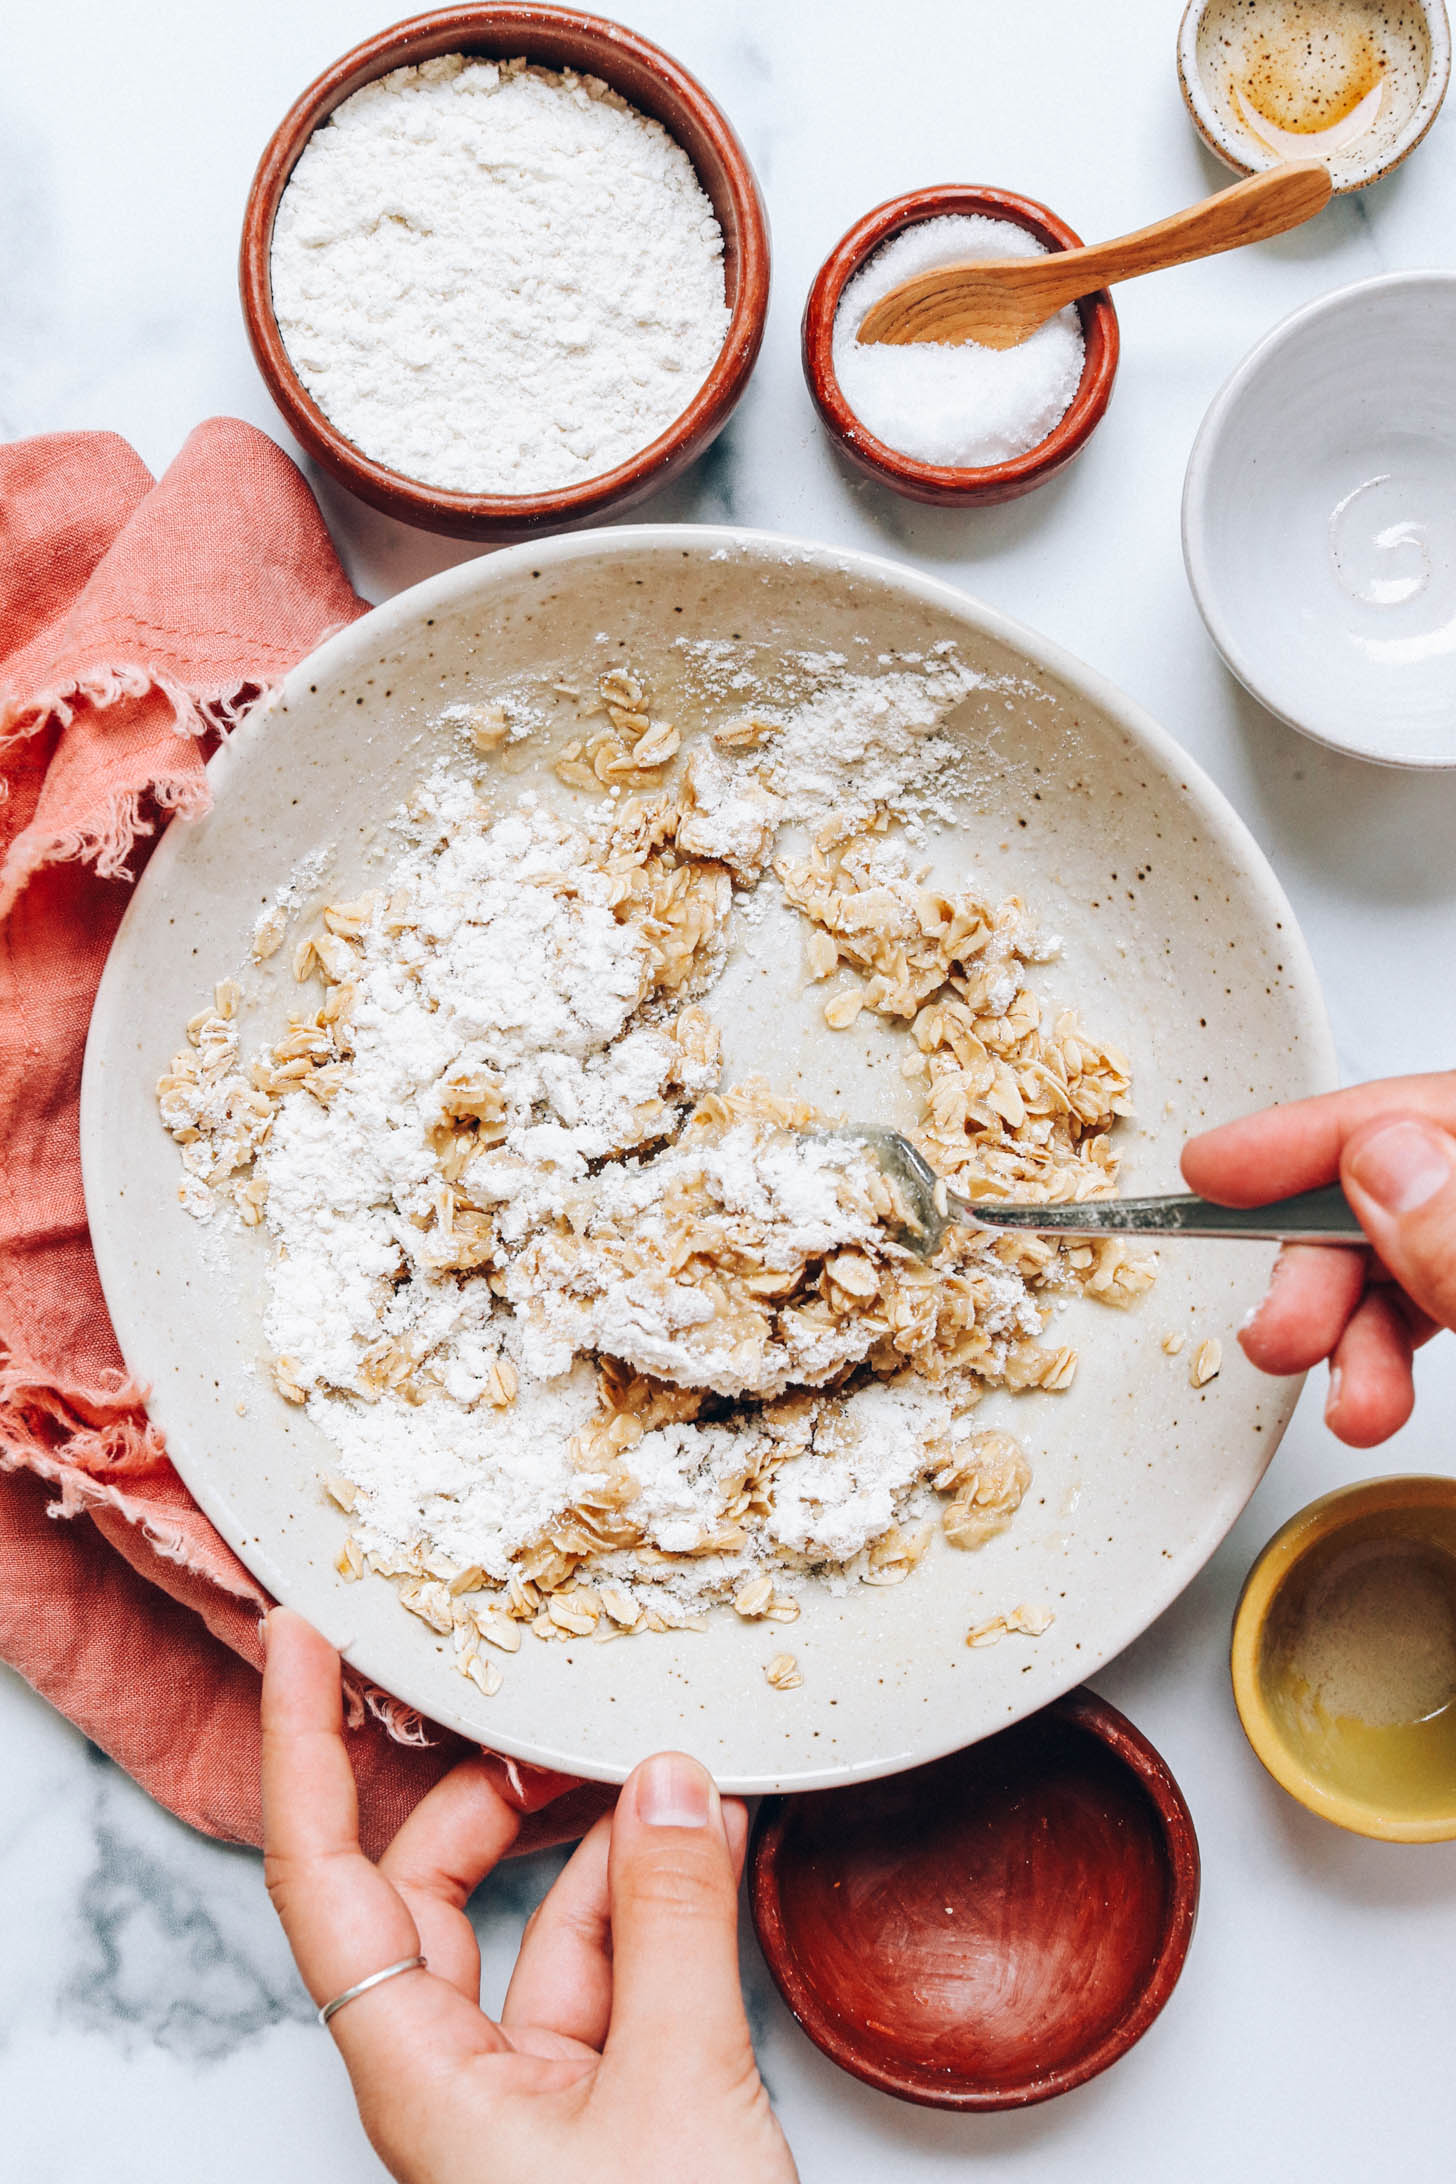 Stirring oats, gluten-free flour, vegan butter, vanilla, salt, and sugar to make a crumble topping